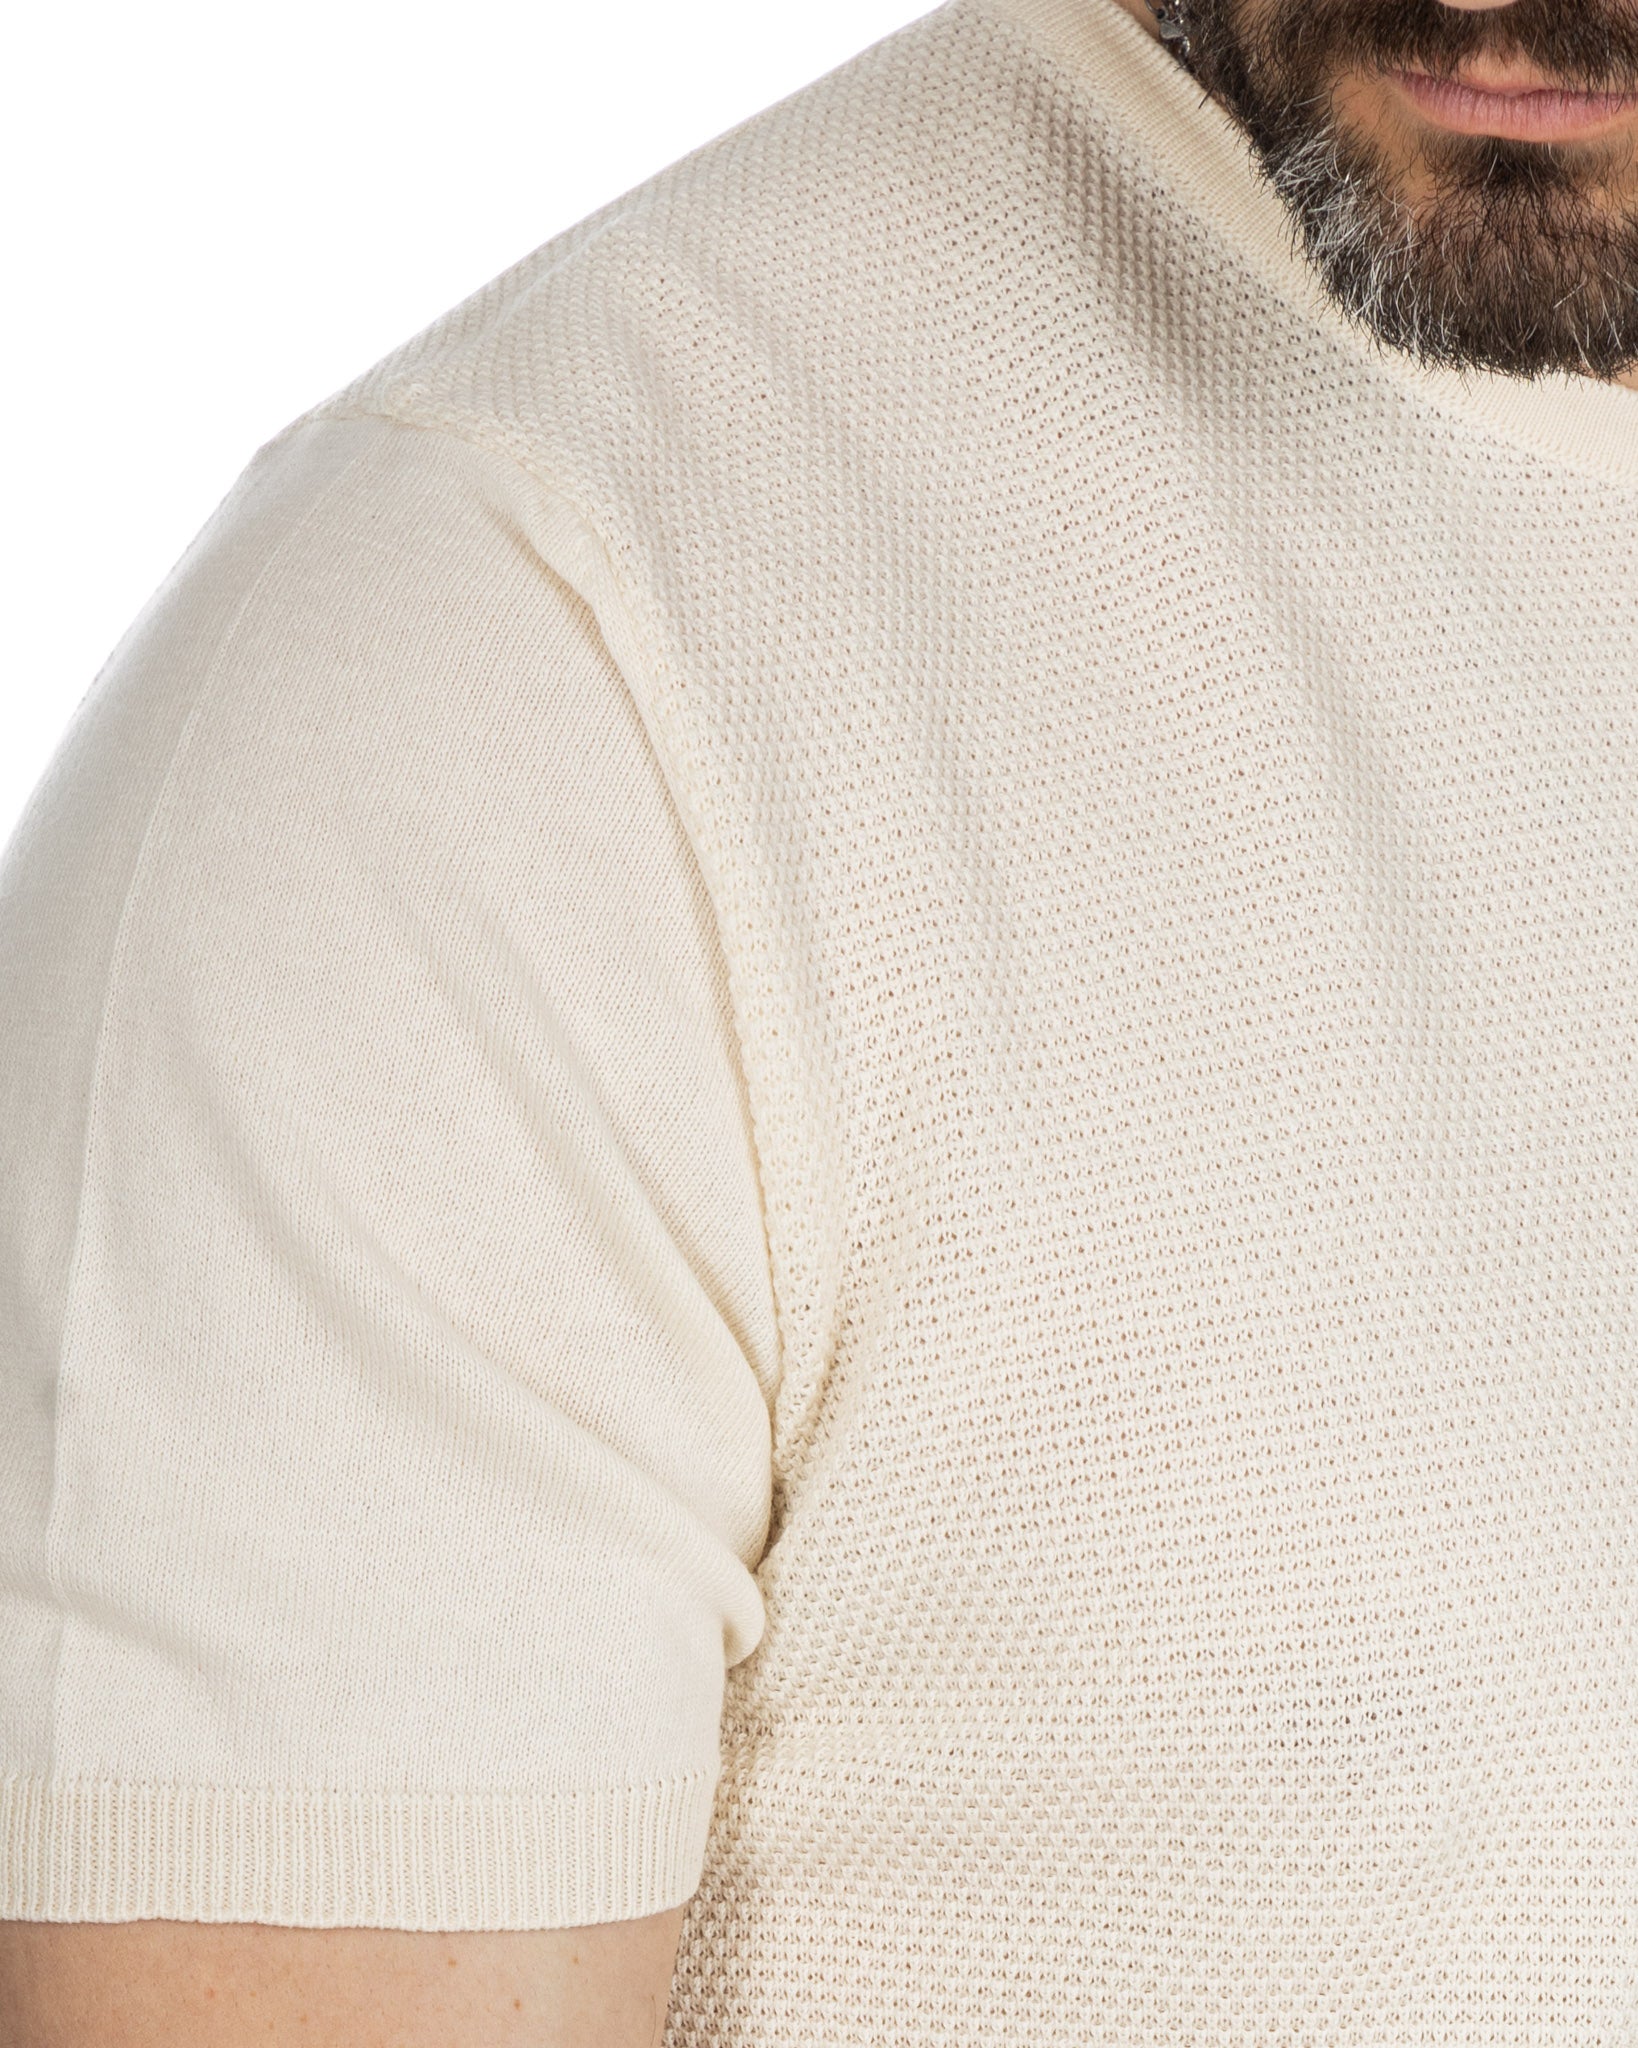 Lorenzo - cream t-shirt in jacquard knit